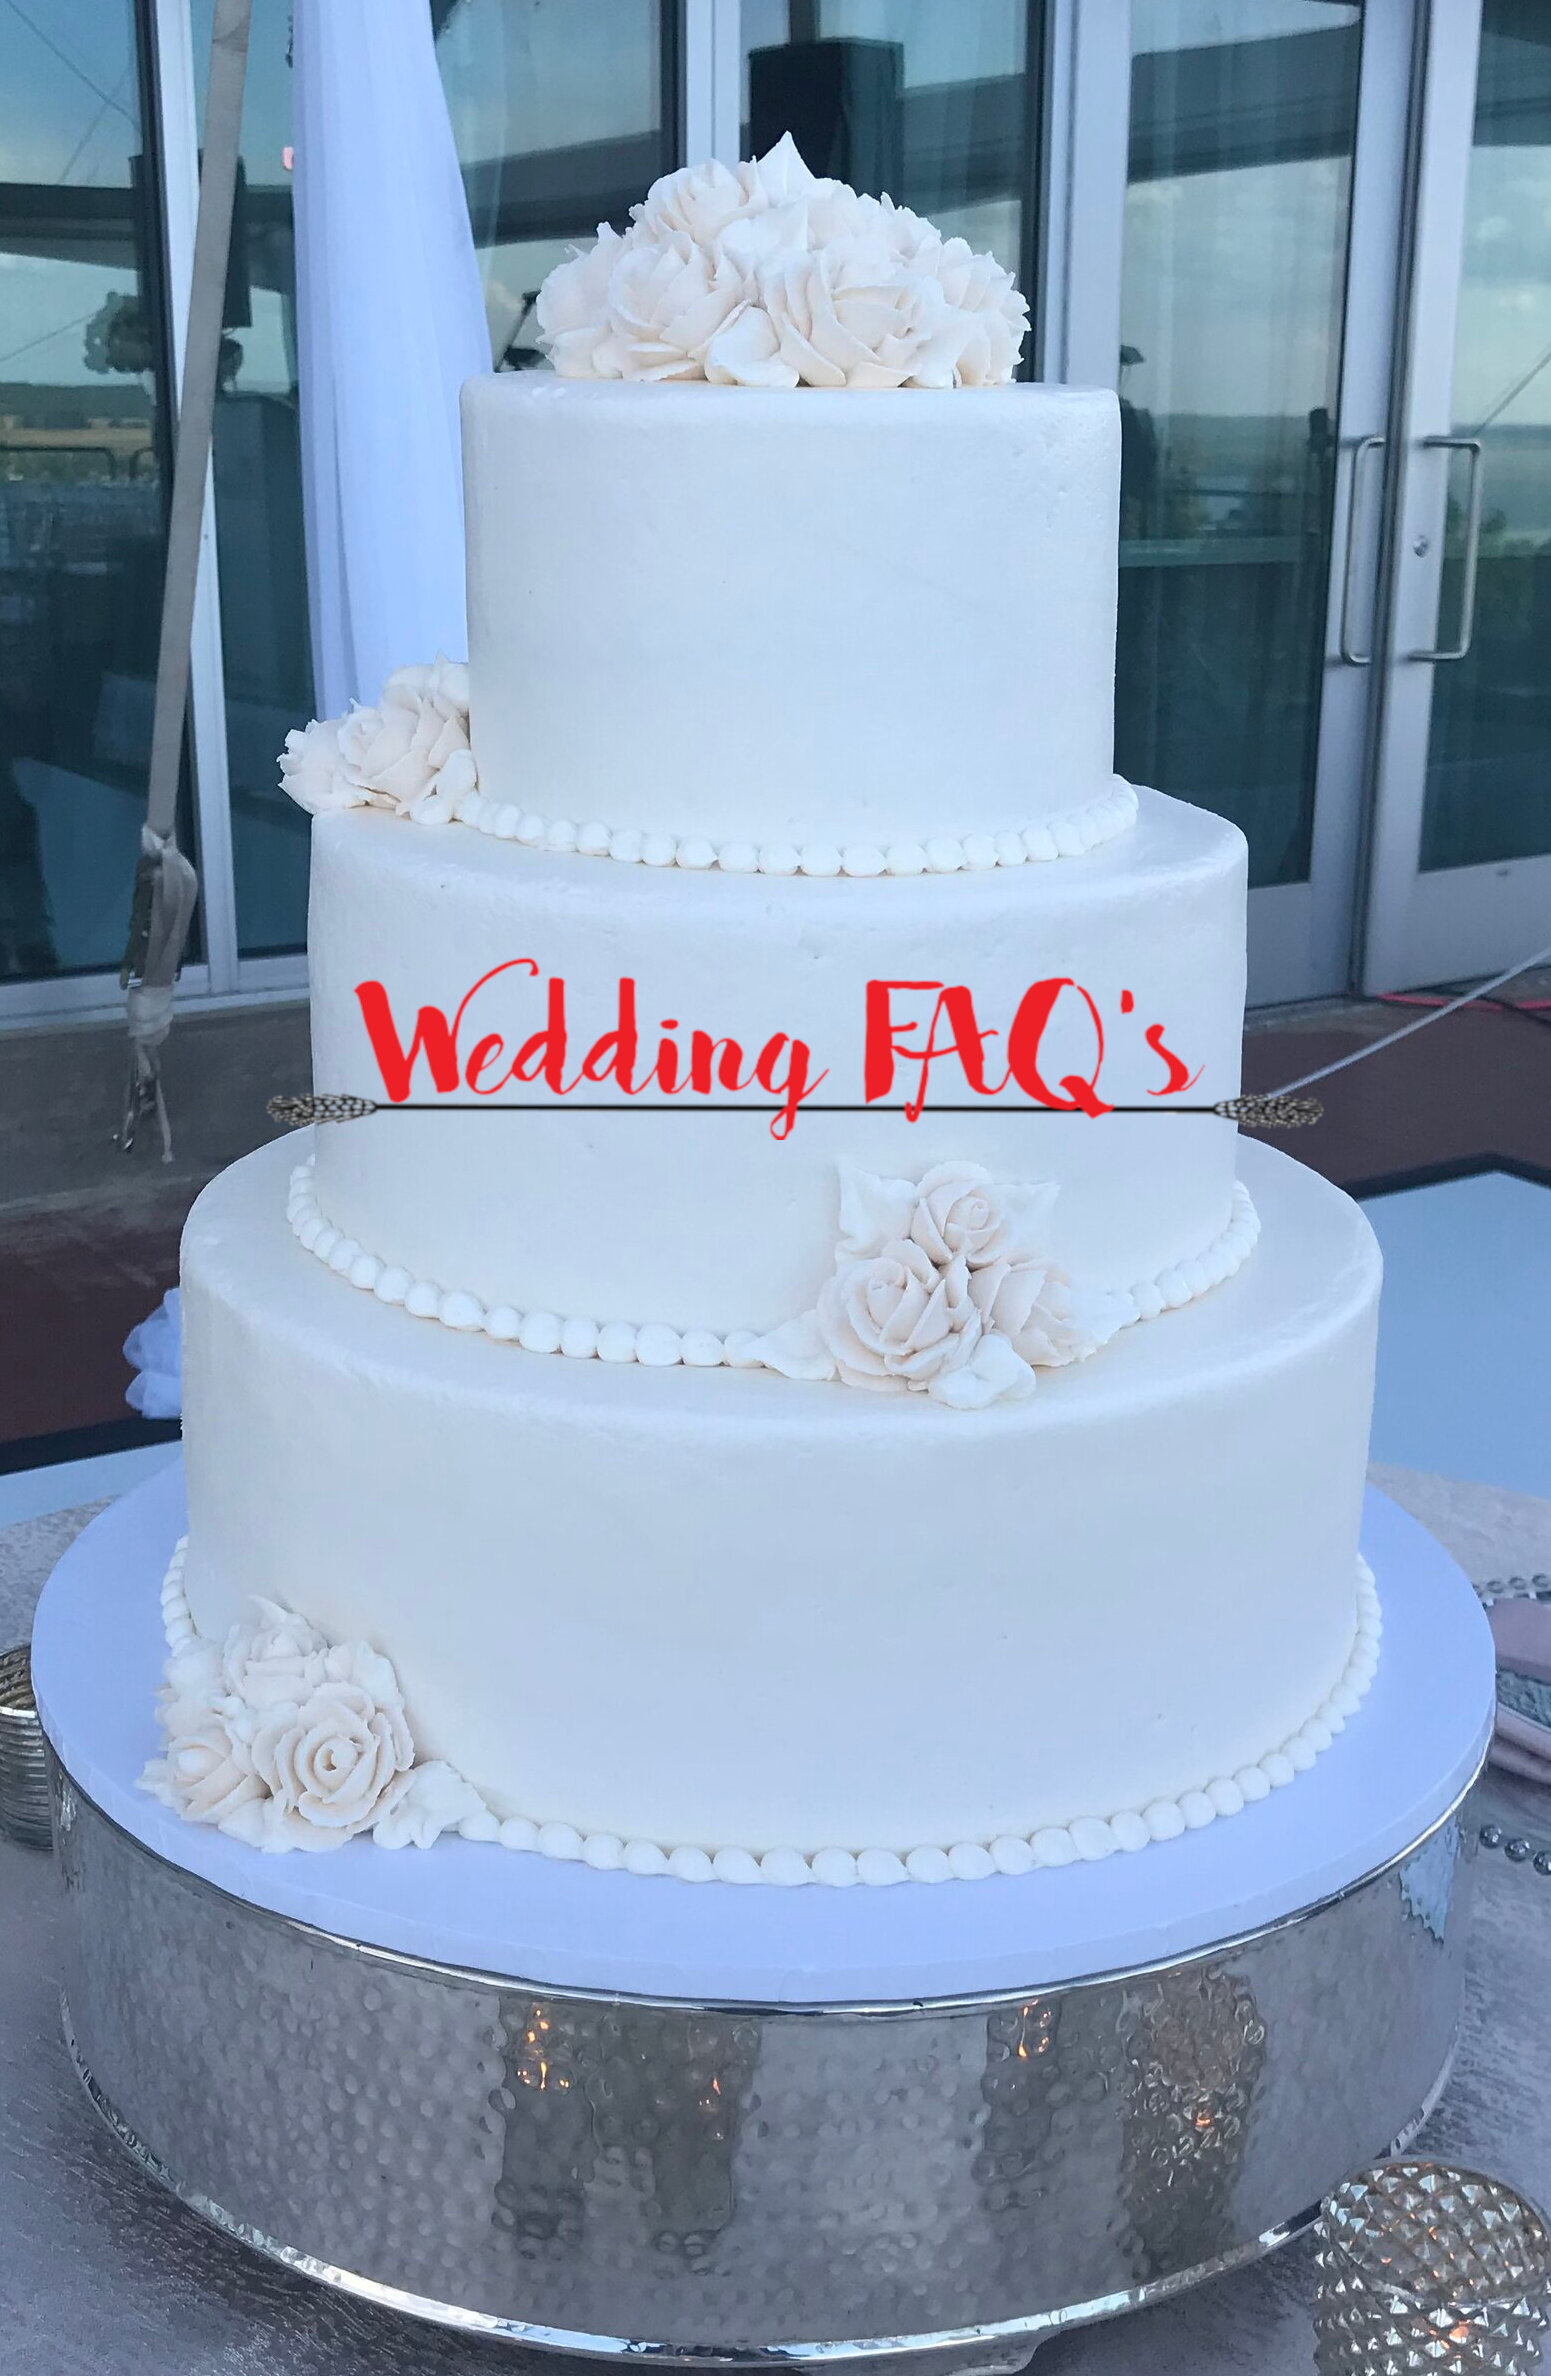 Wedding FAQs Cake.jpg